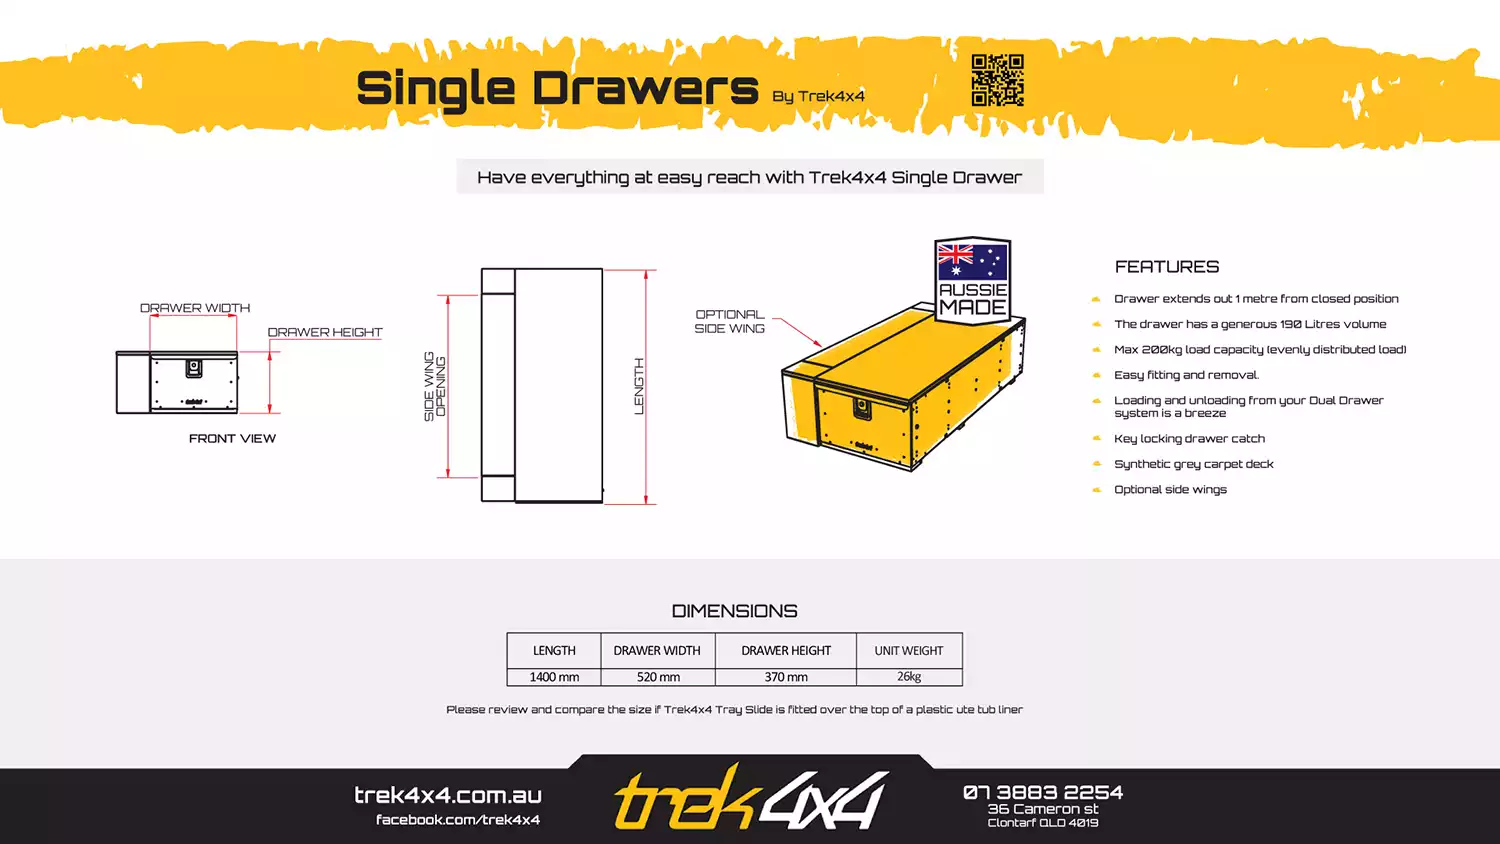 Single Drawers -Brochure